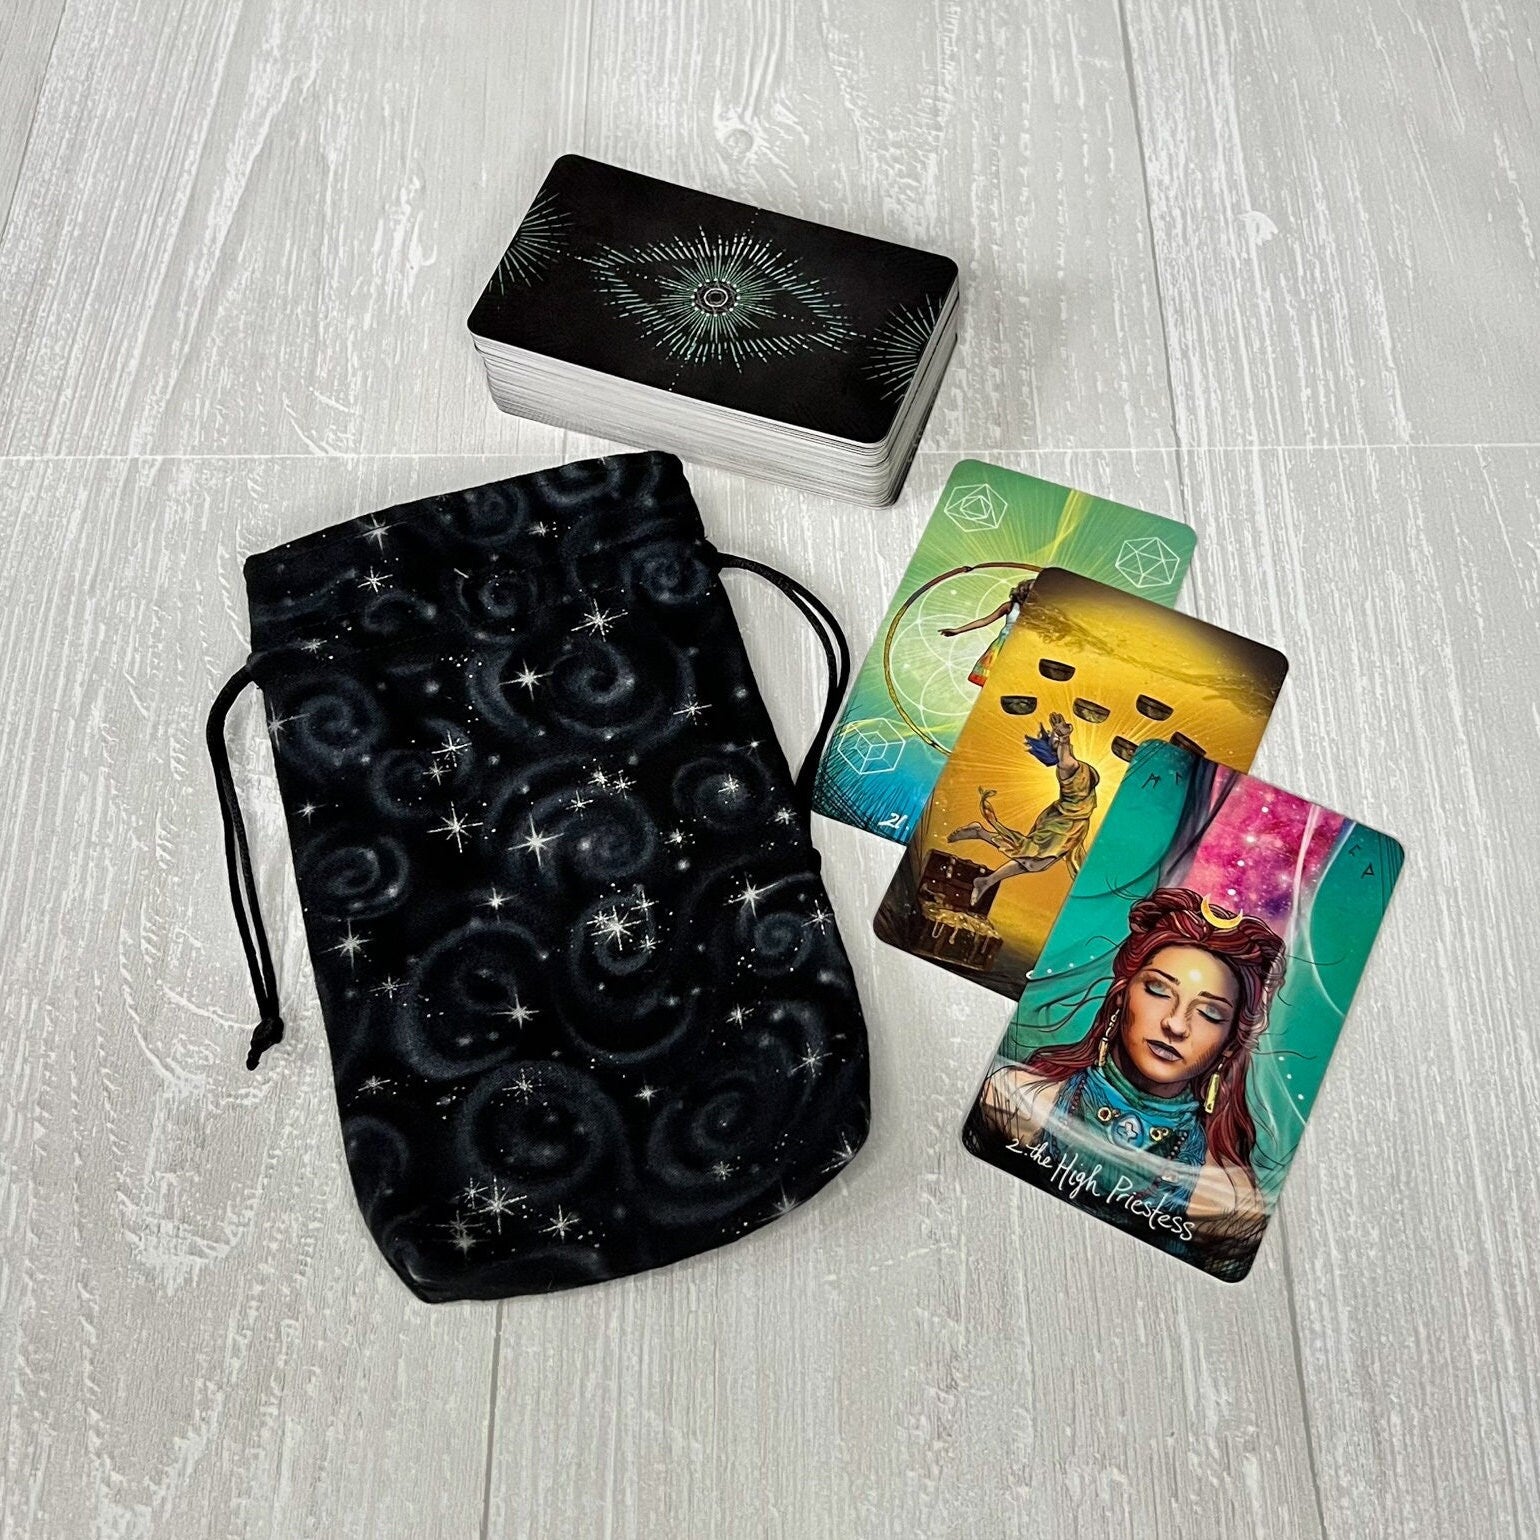 Black Celestial Tarot Bag, Drawstring Pouch, Standard Tarot Deck Storage, Divination Tools & Supplies, Pagan Witchcraft Tarot Reader Gifts